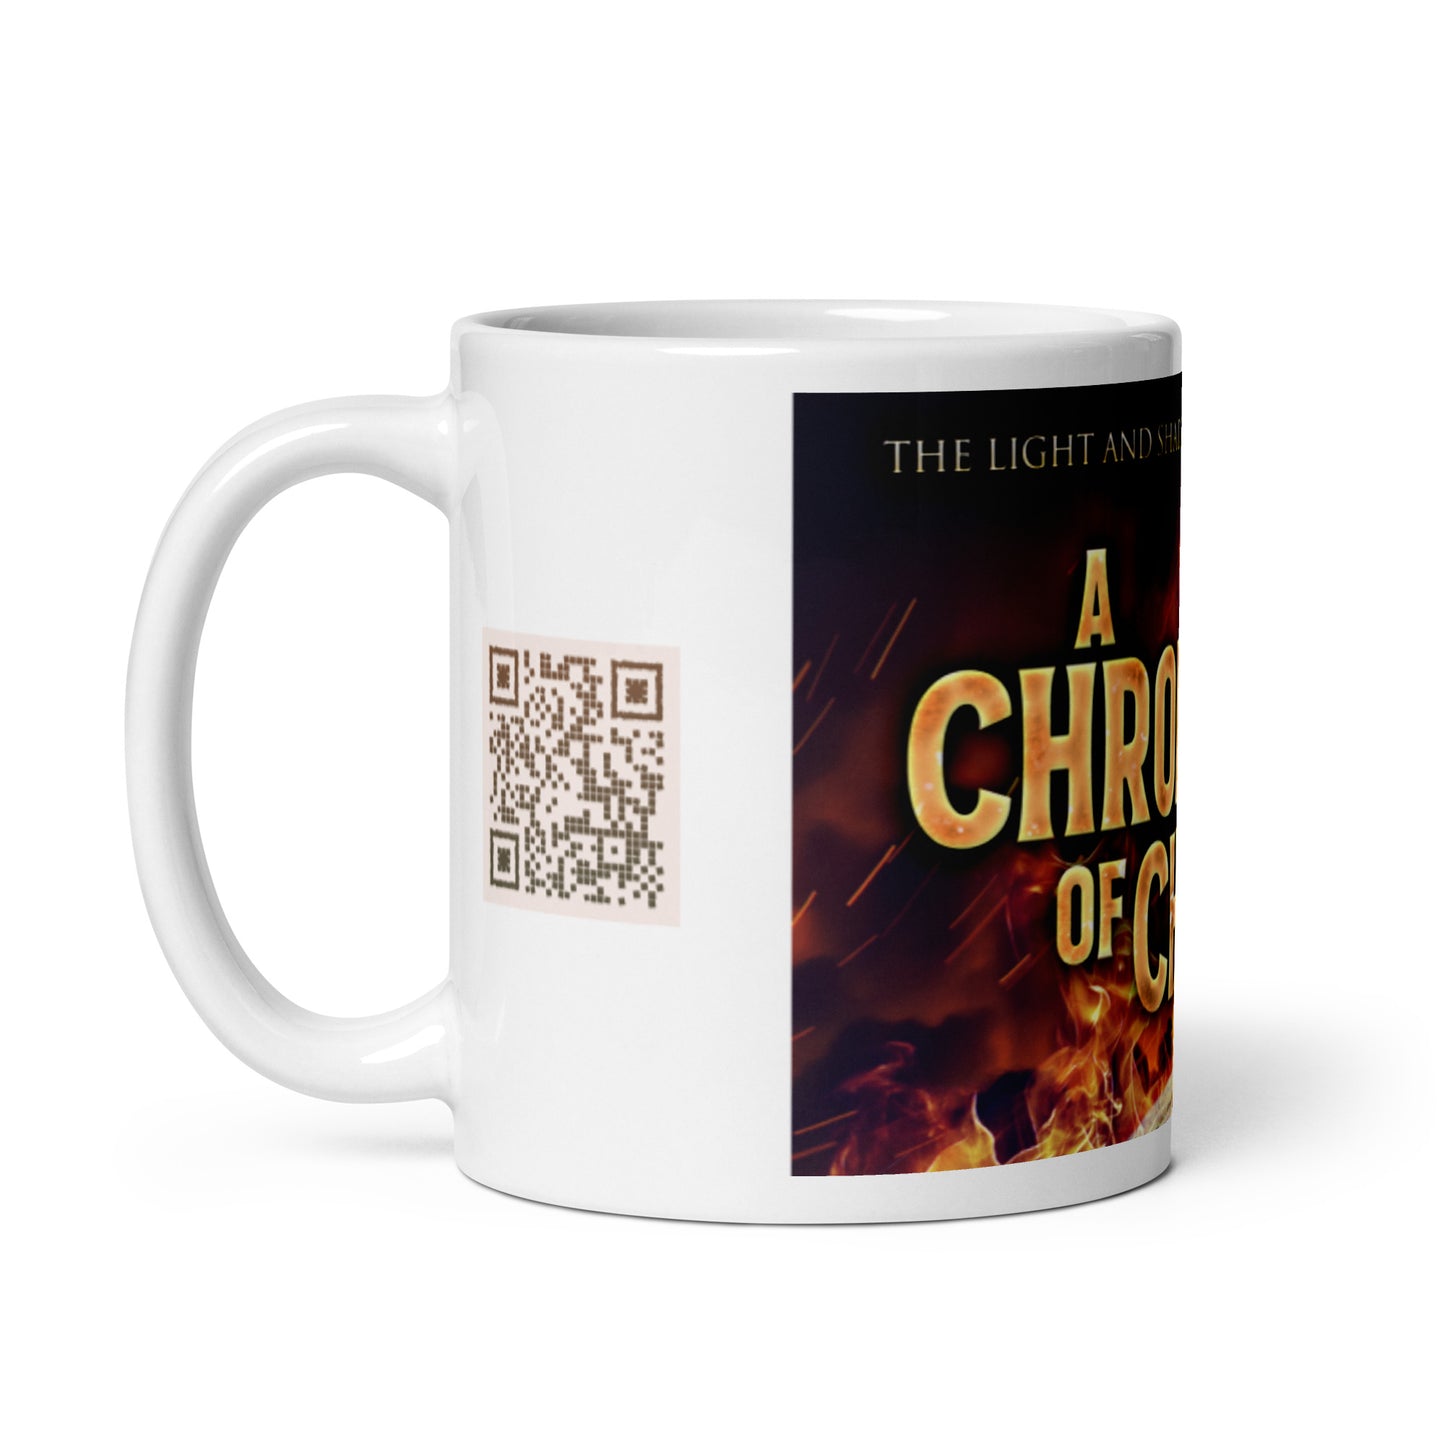 A Chronicle Of Chaos - White Coffee Mug